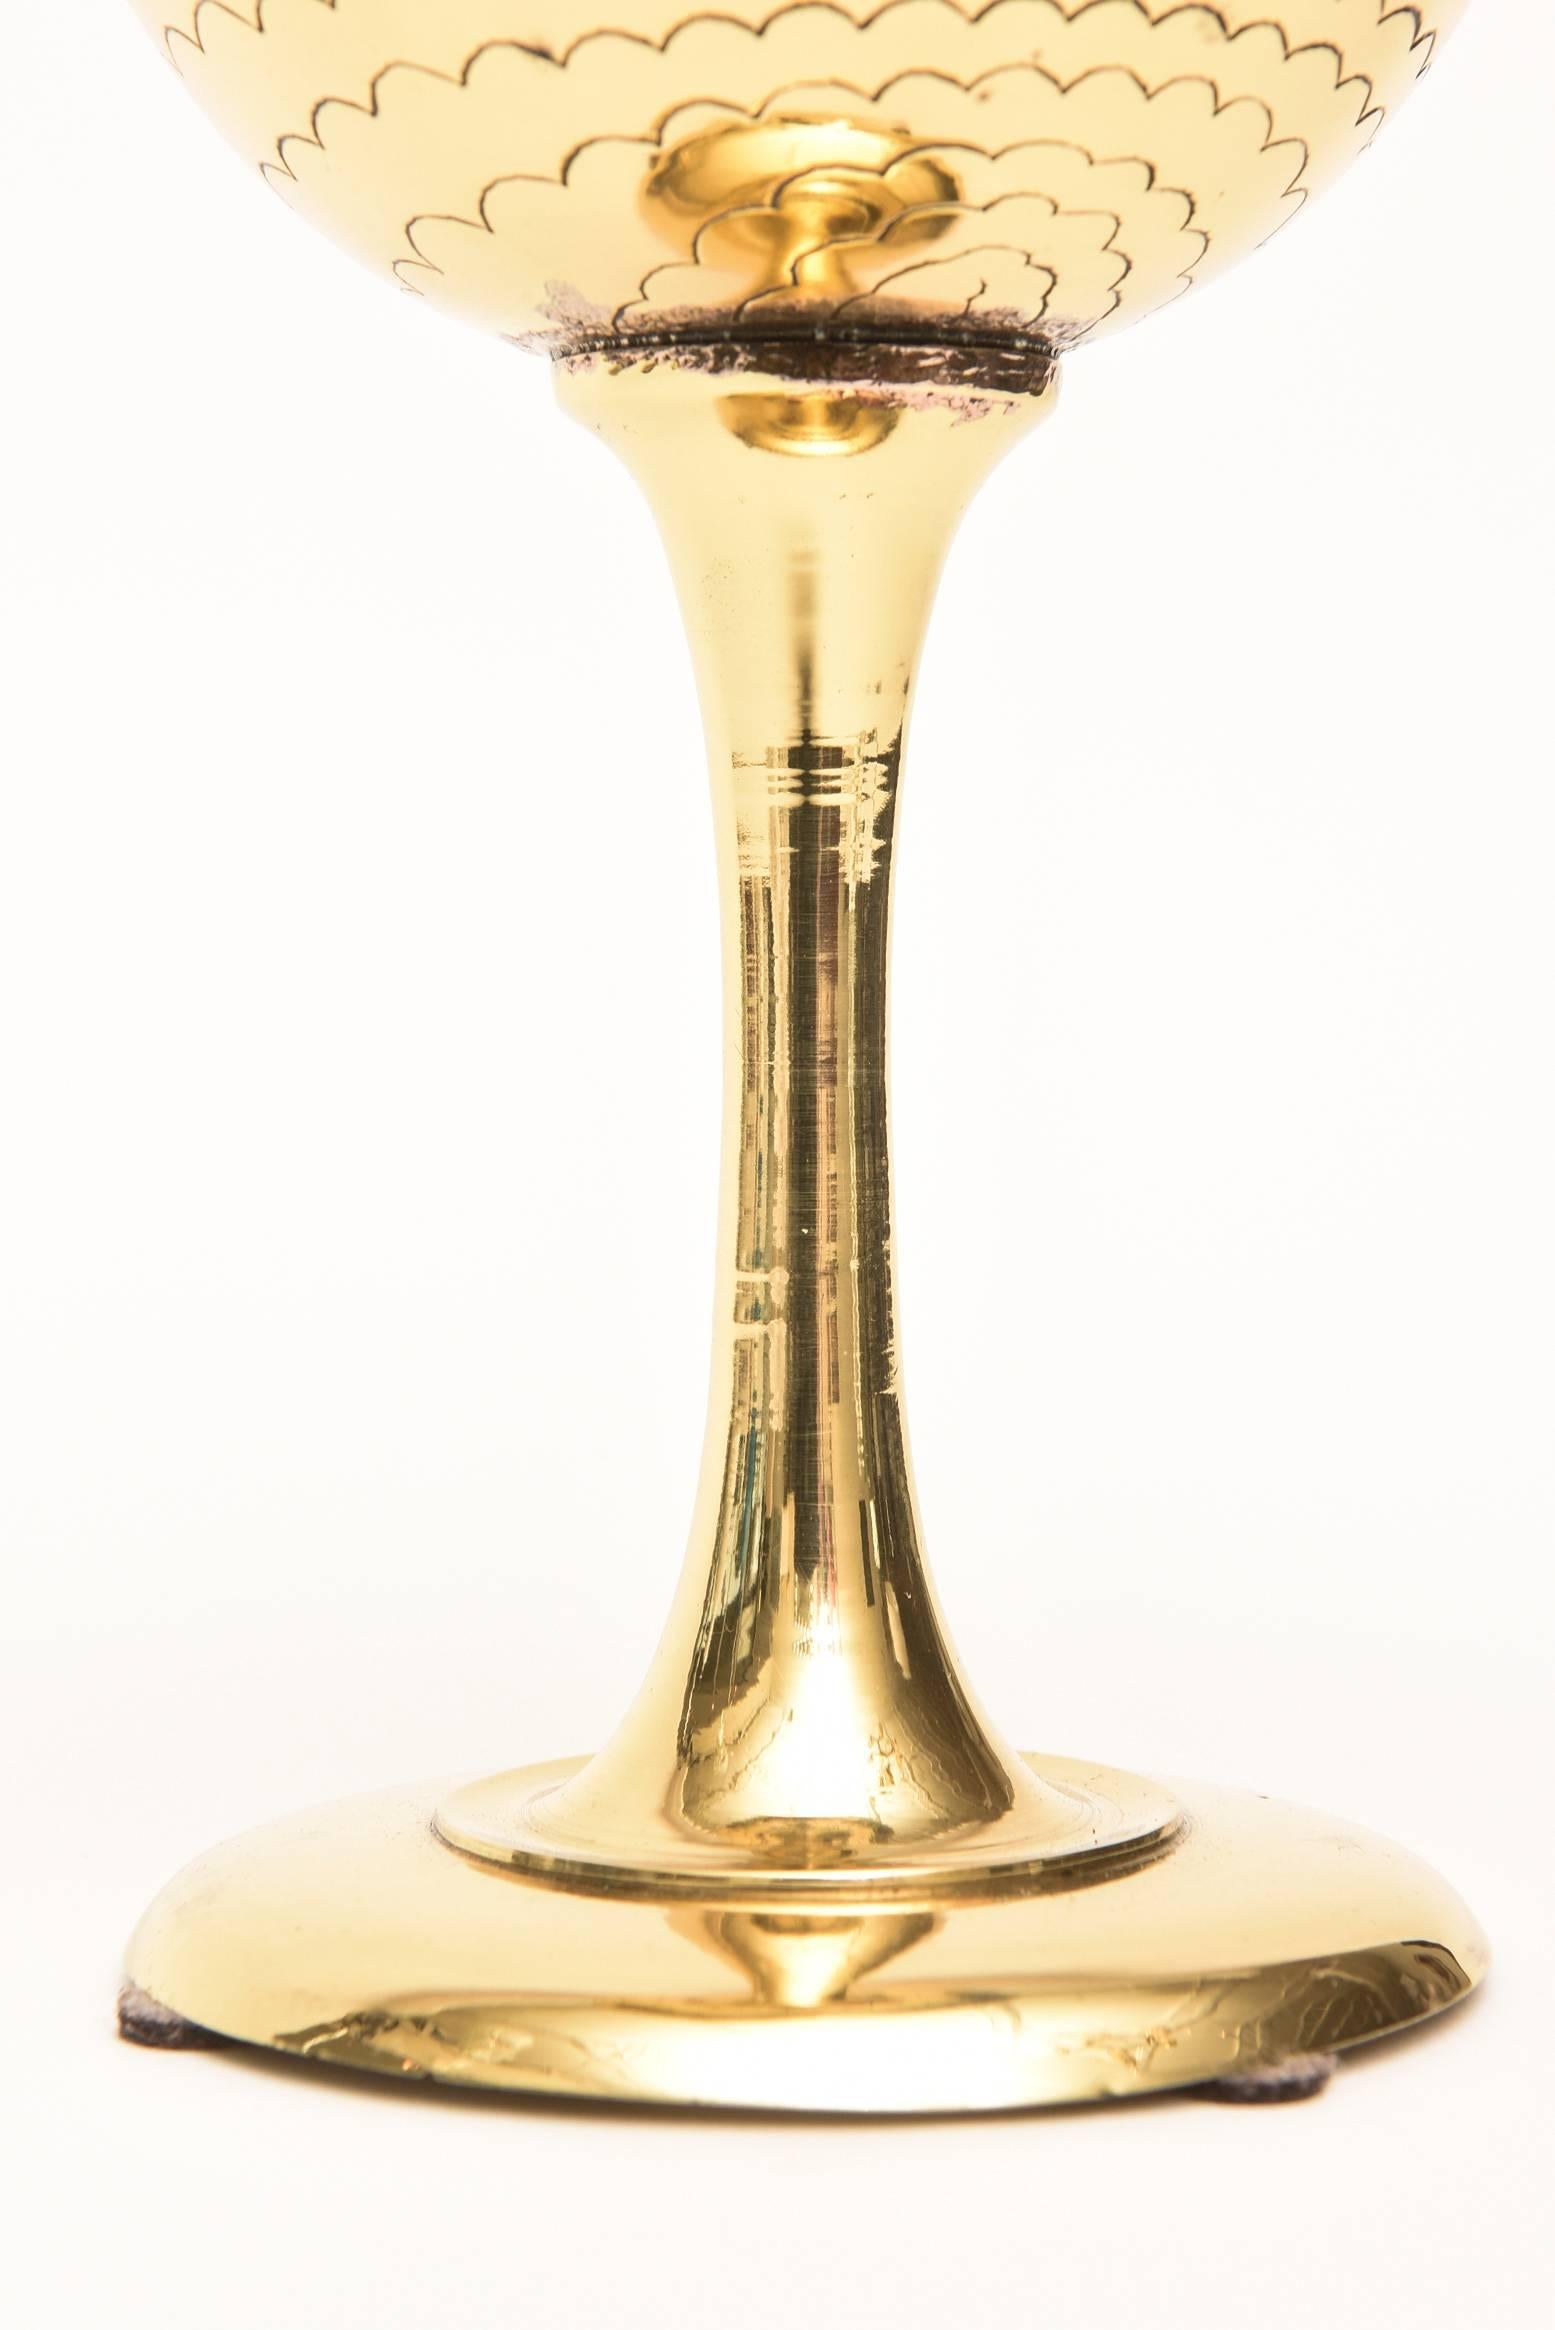 American Brass Globe Sculpture or Object Mid-Century Modern Desk Accessory